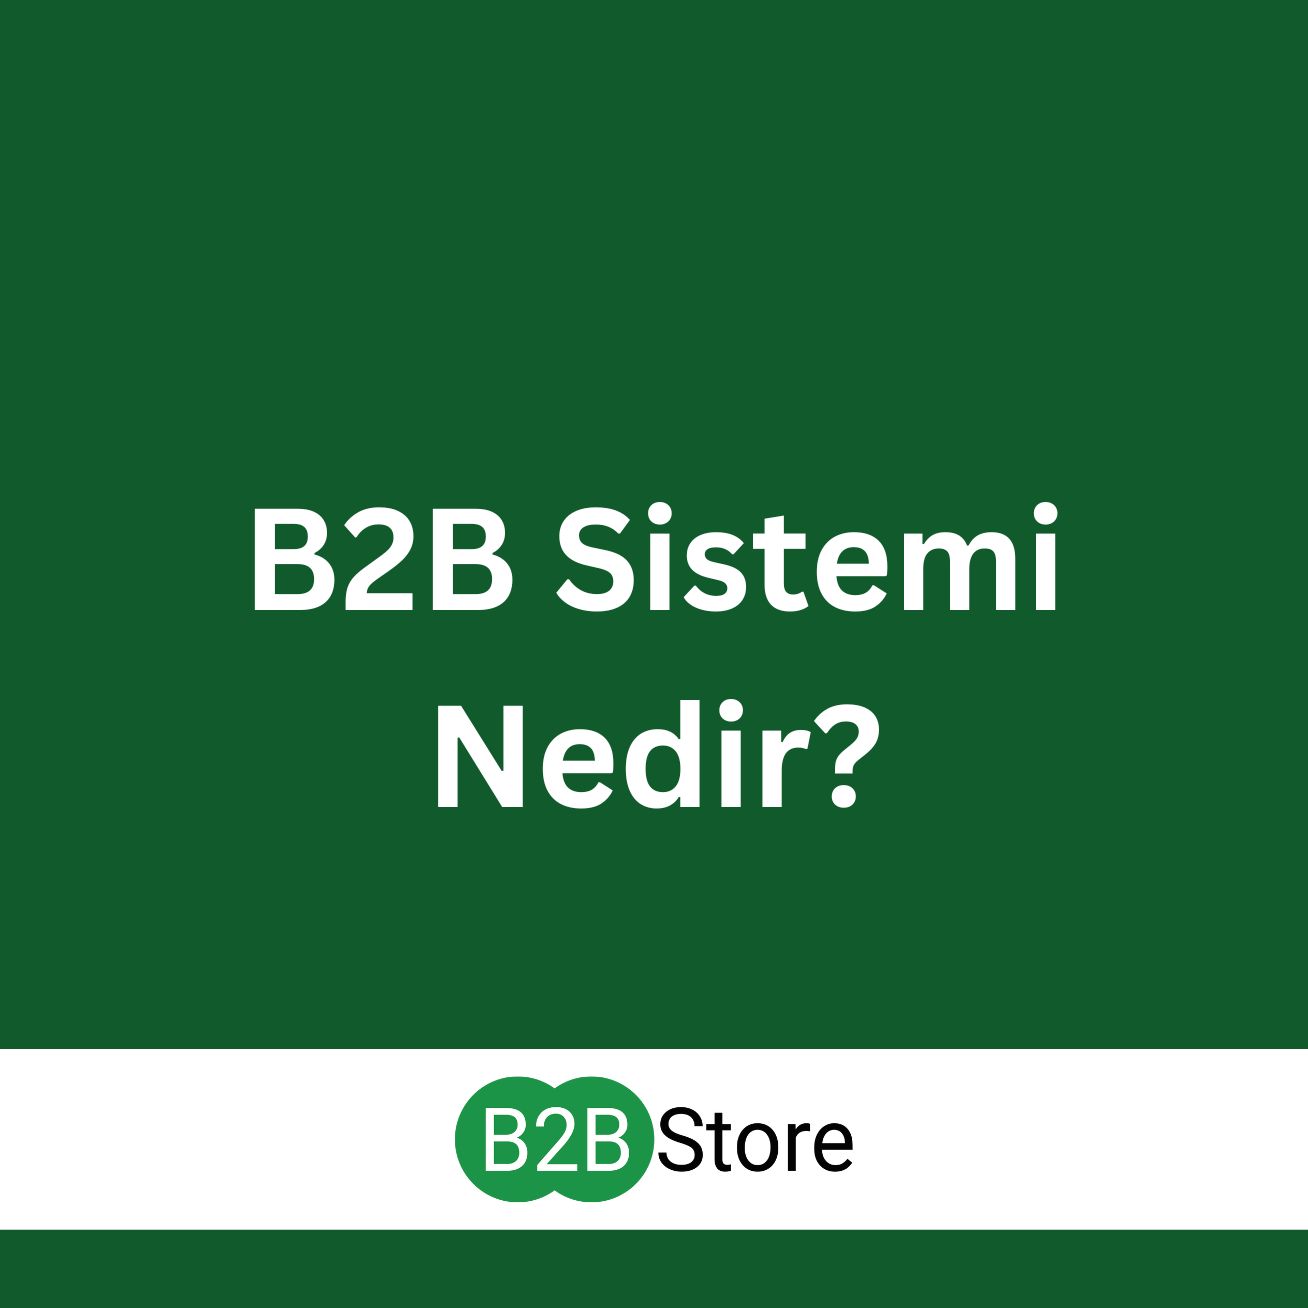 B2B Store B2B Sistemi Nedir?